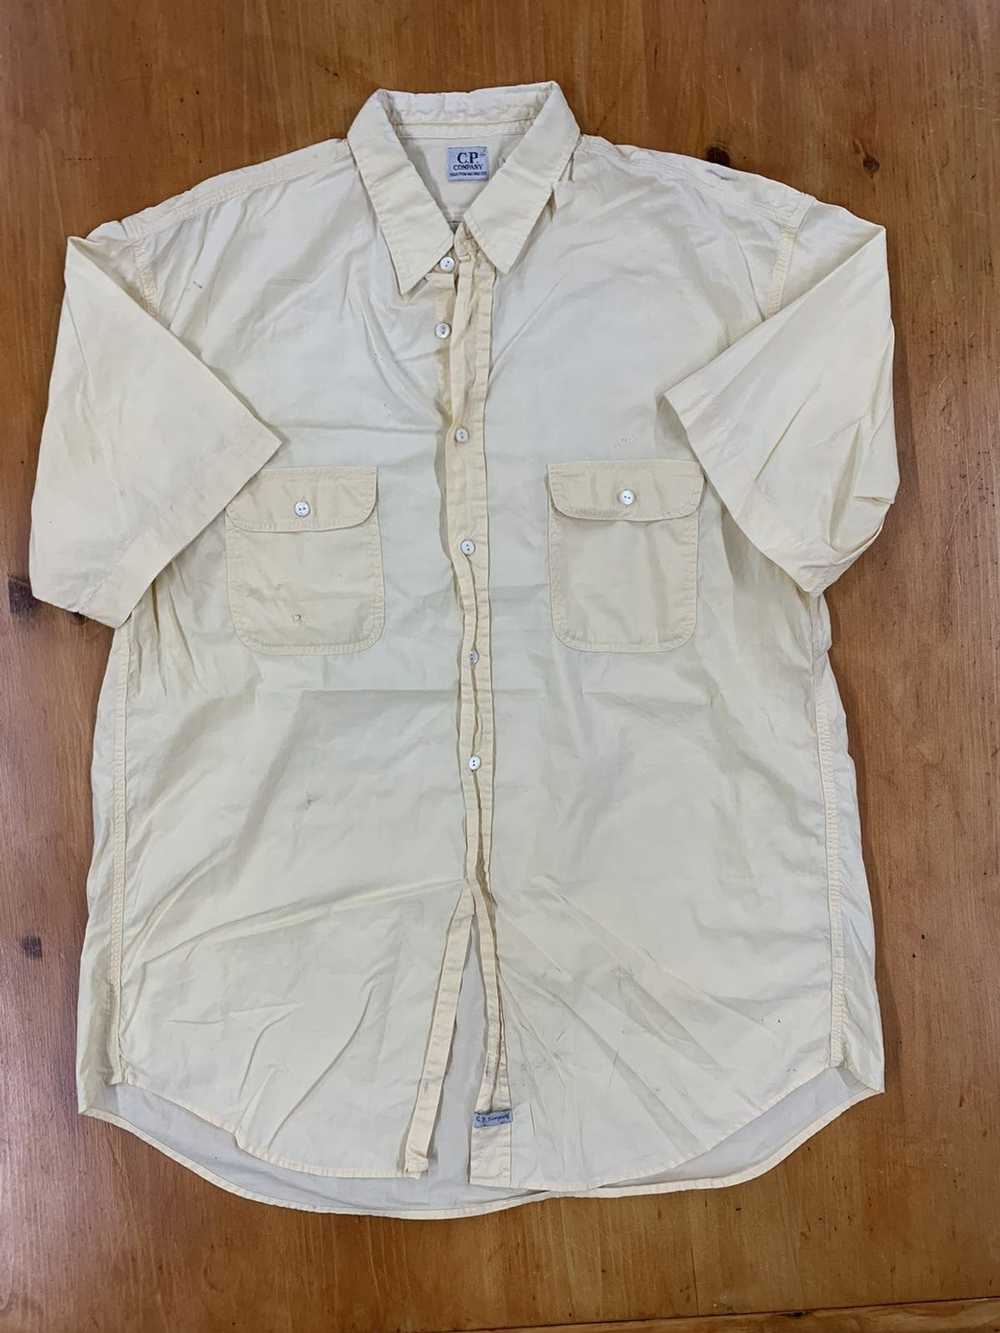 Vintage Vintage CP Company Summer Shirt - image 1